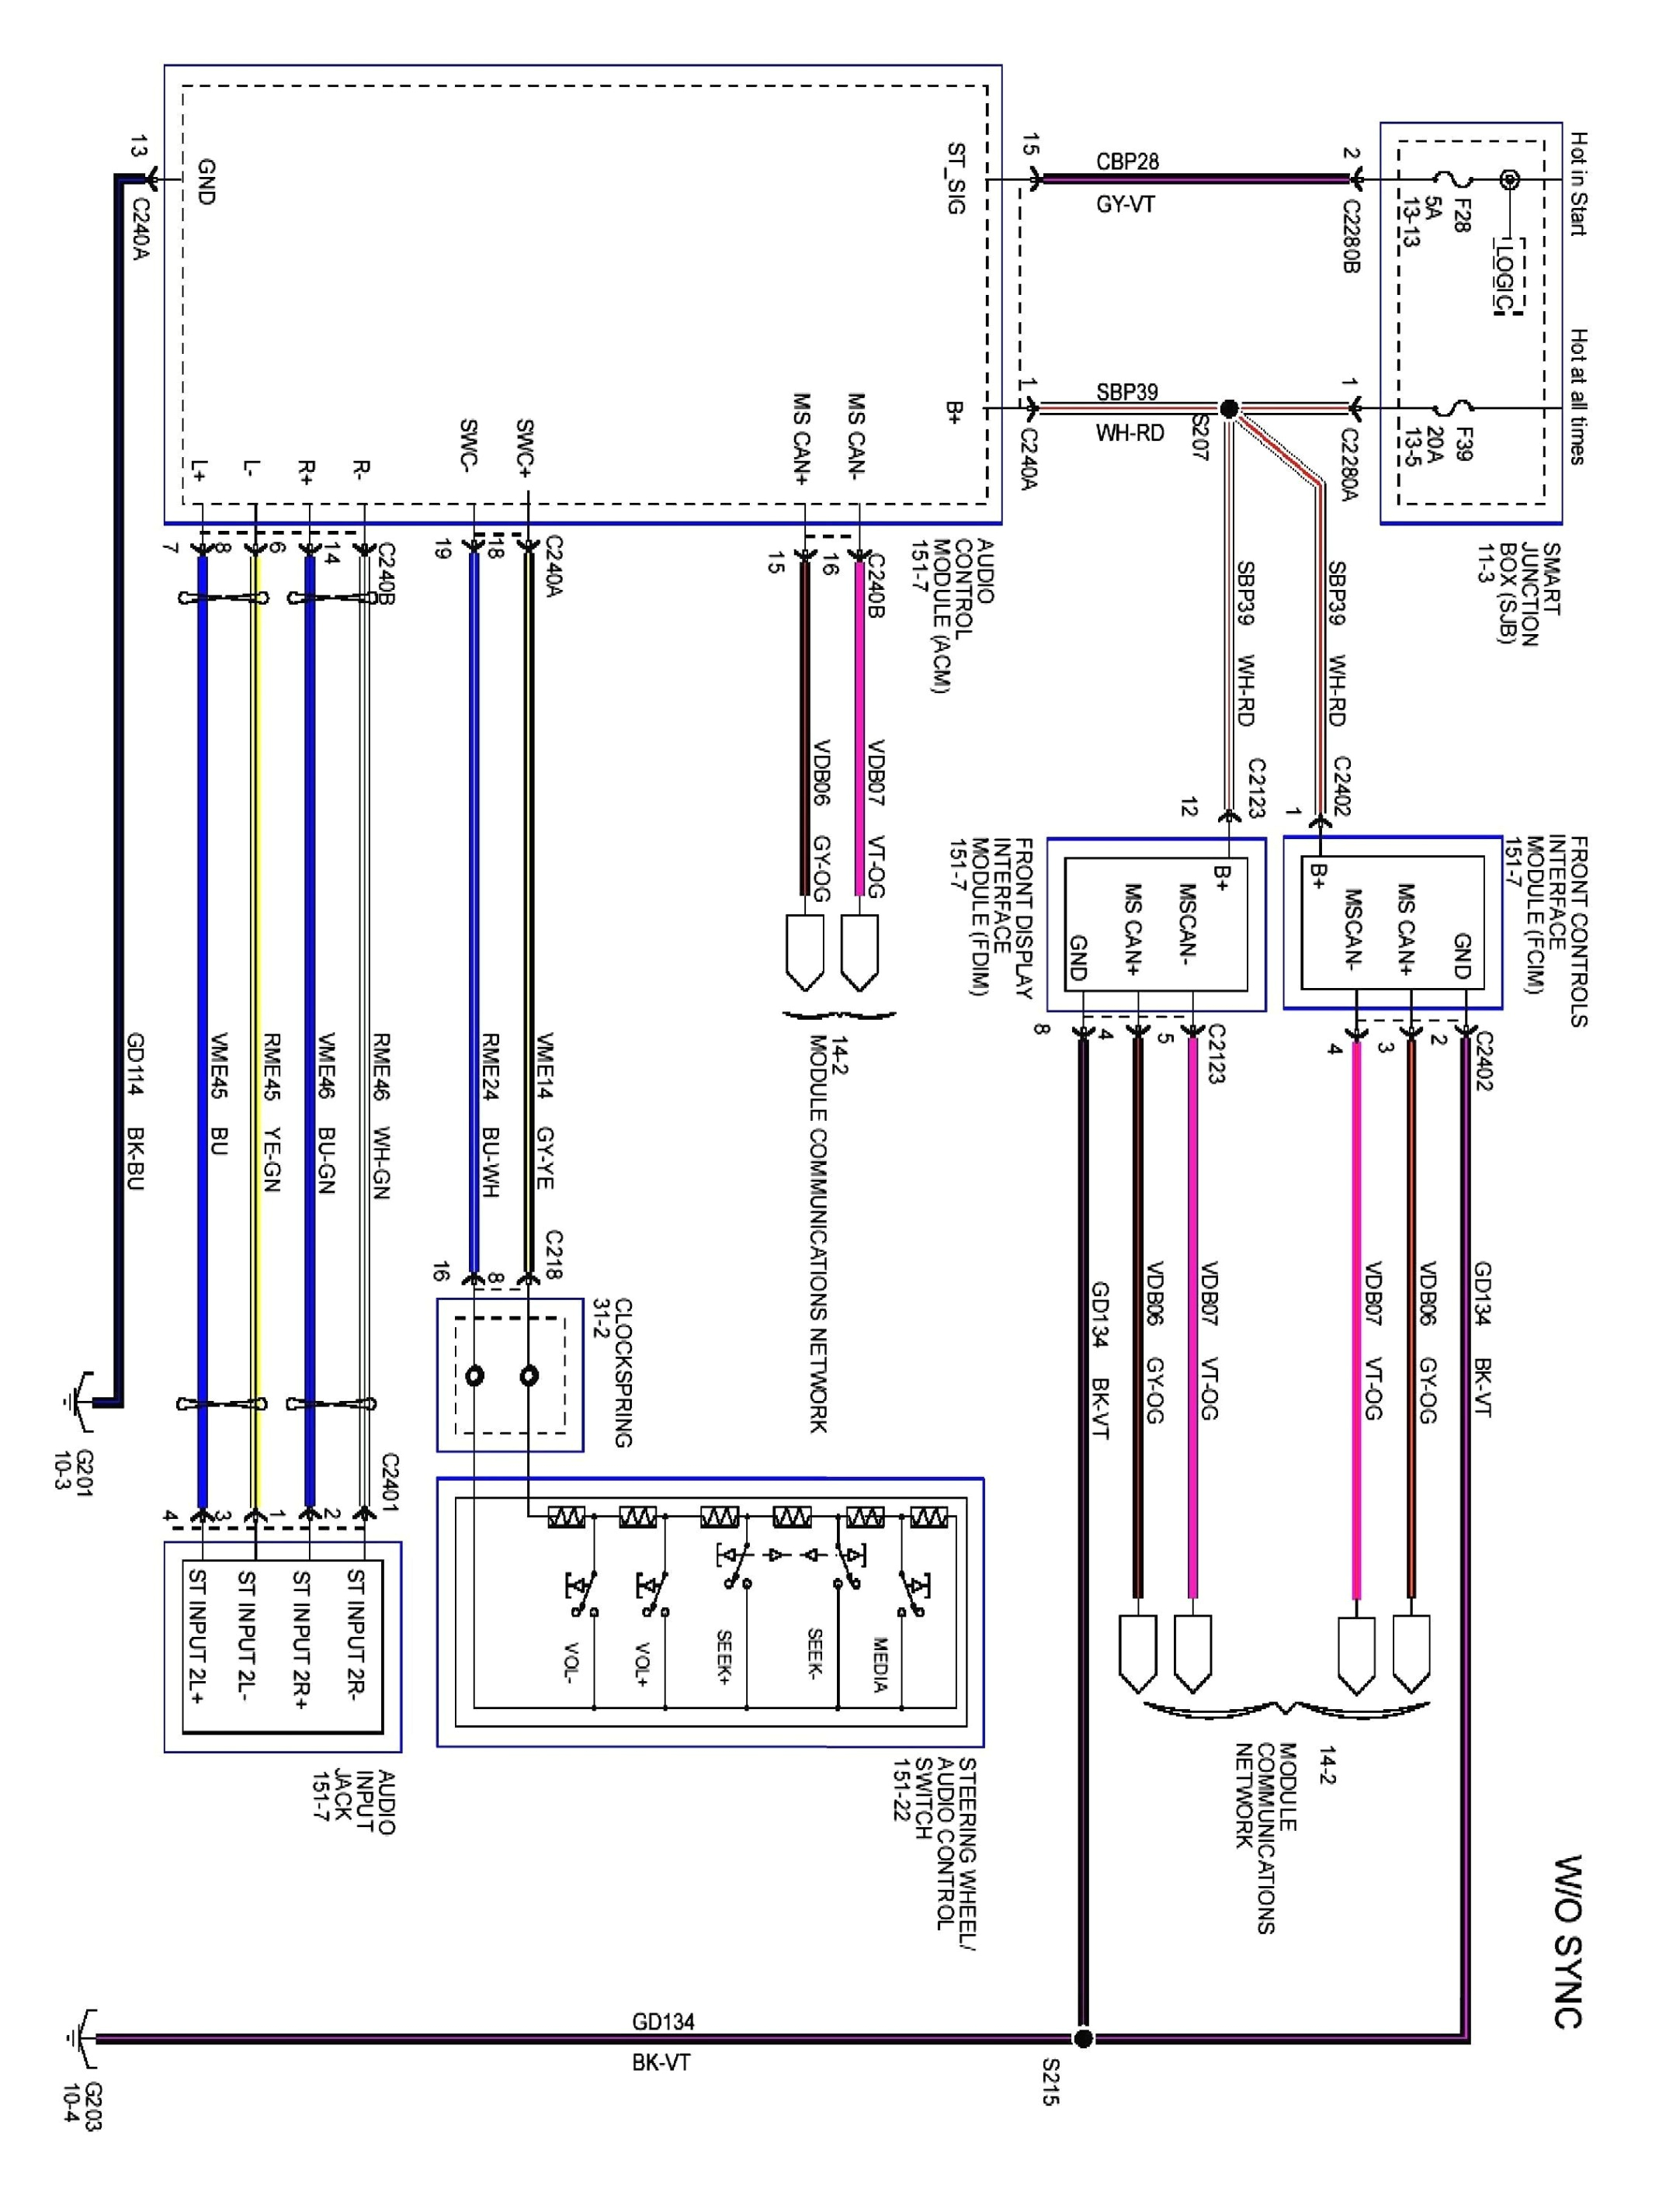 e21 wiring diagram inspirational bmw x5 electrical diagram jpg